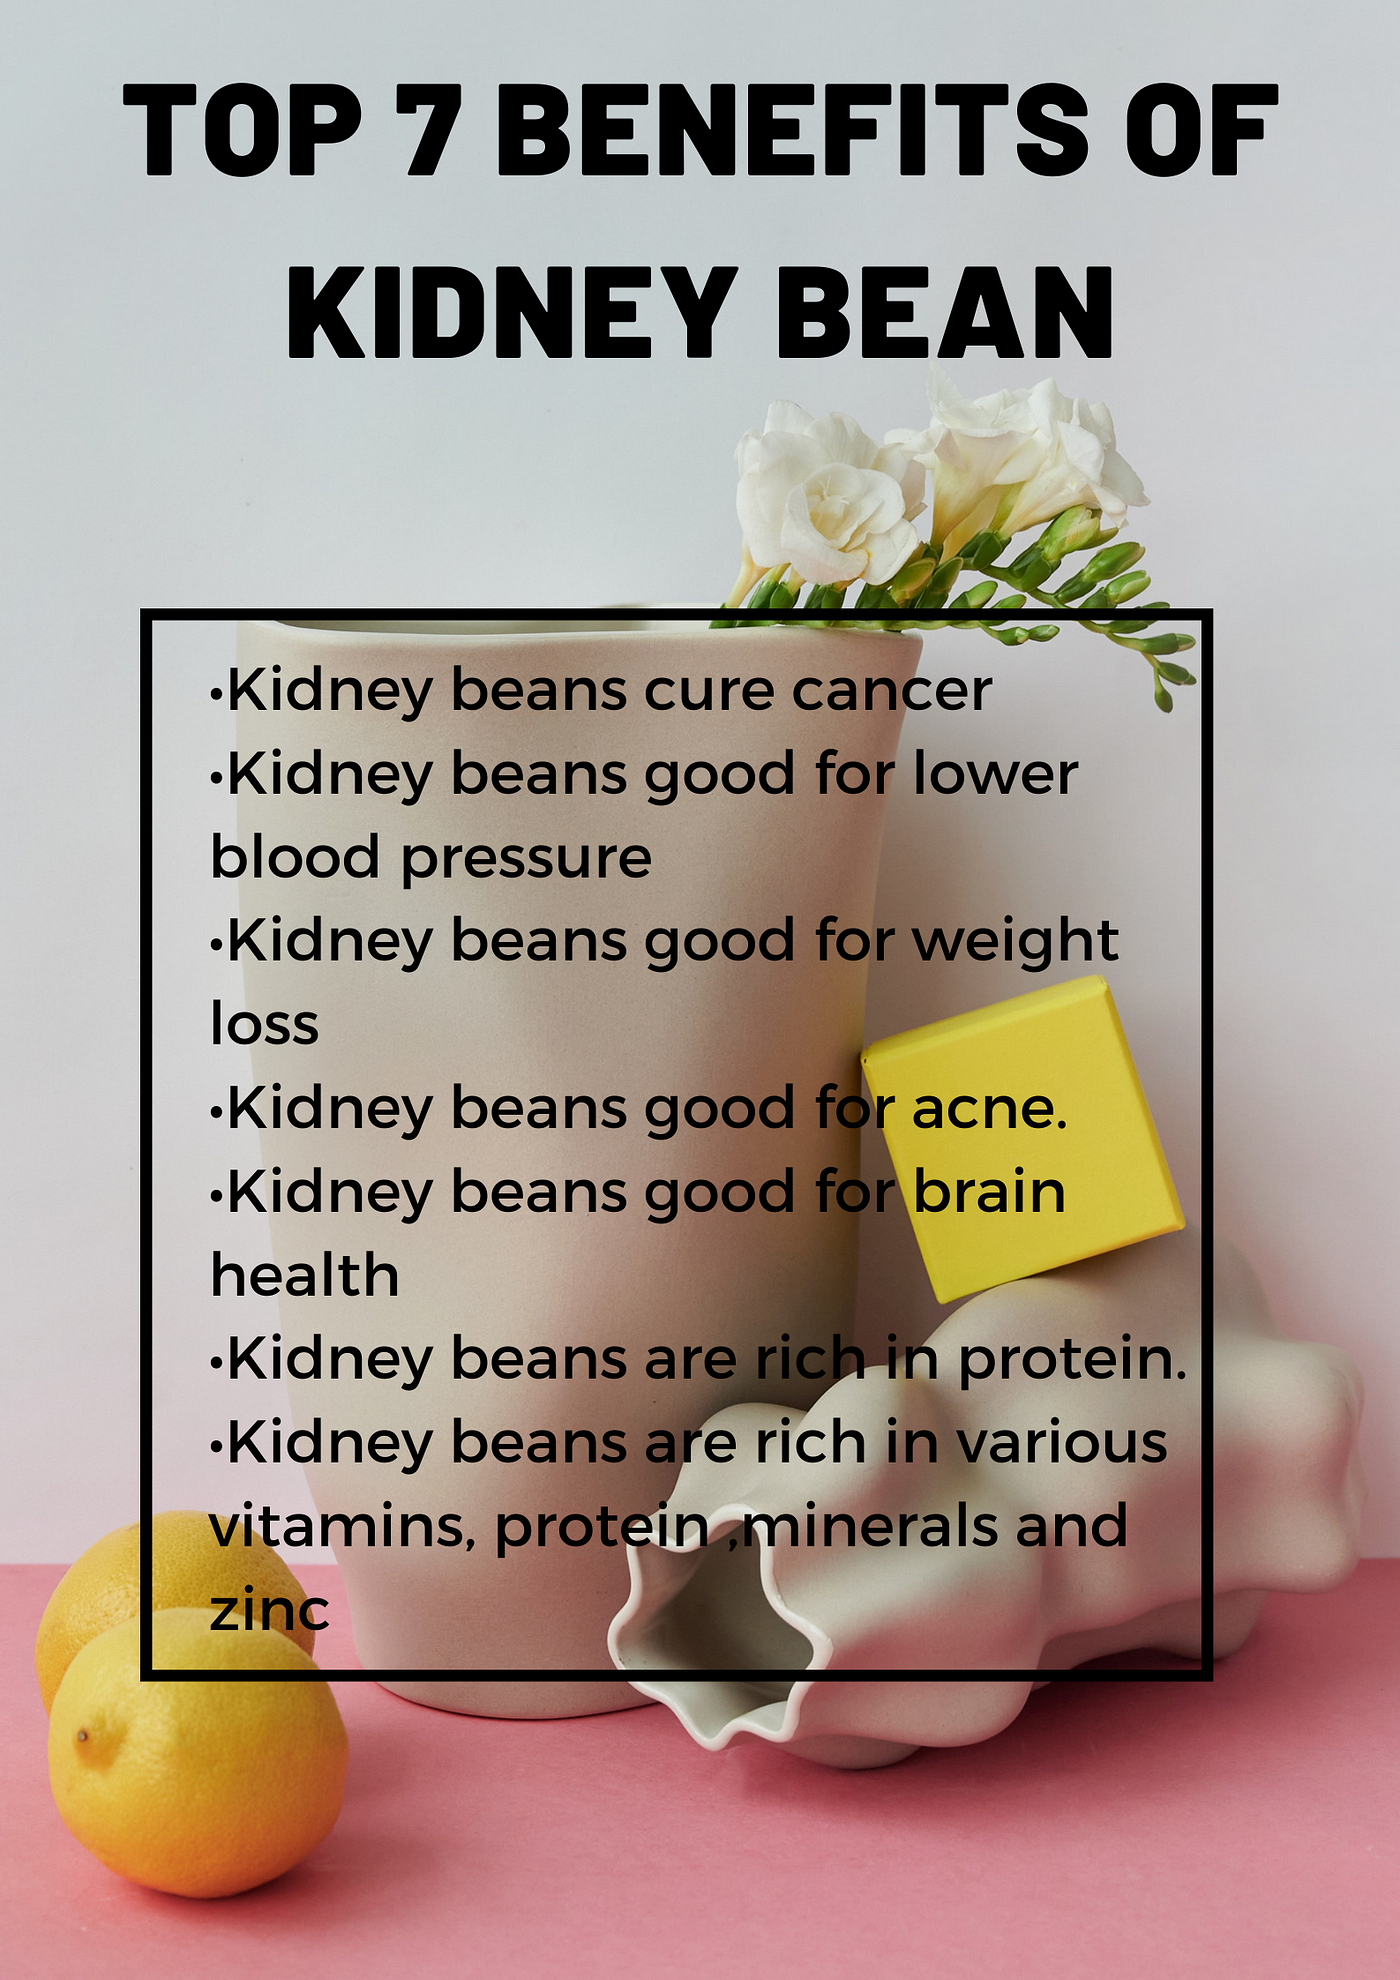 Kidney health benefits